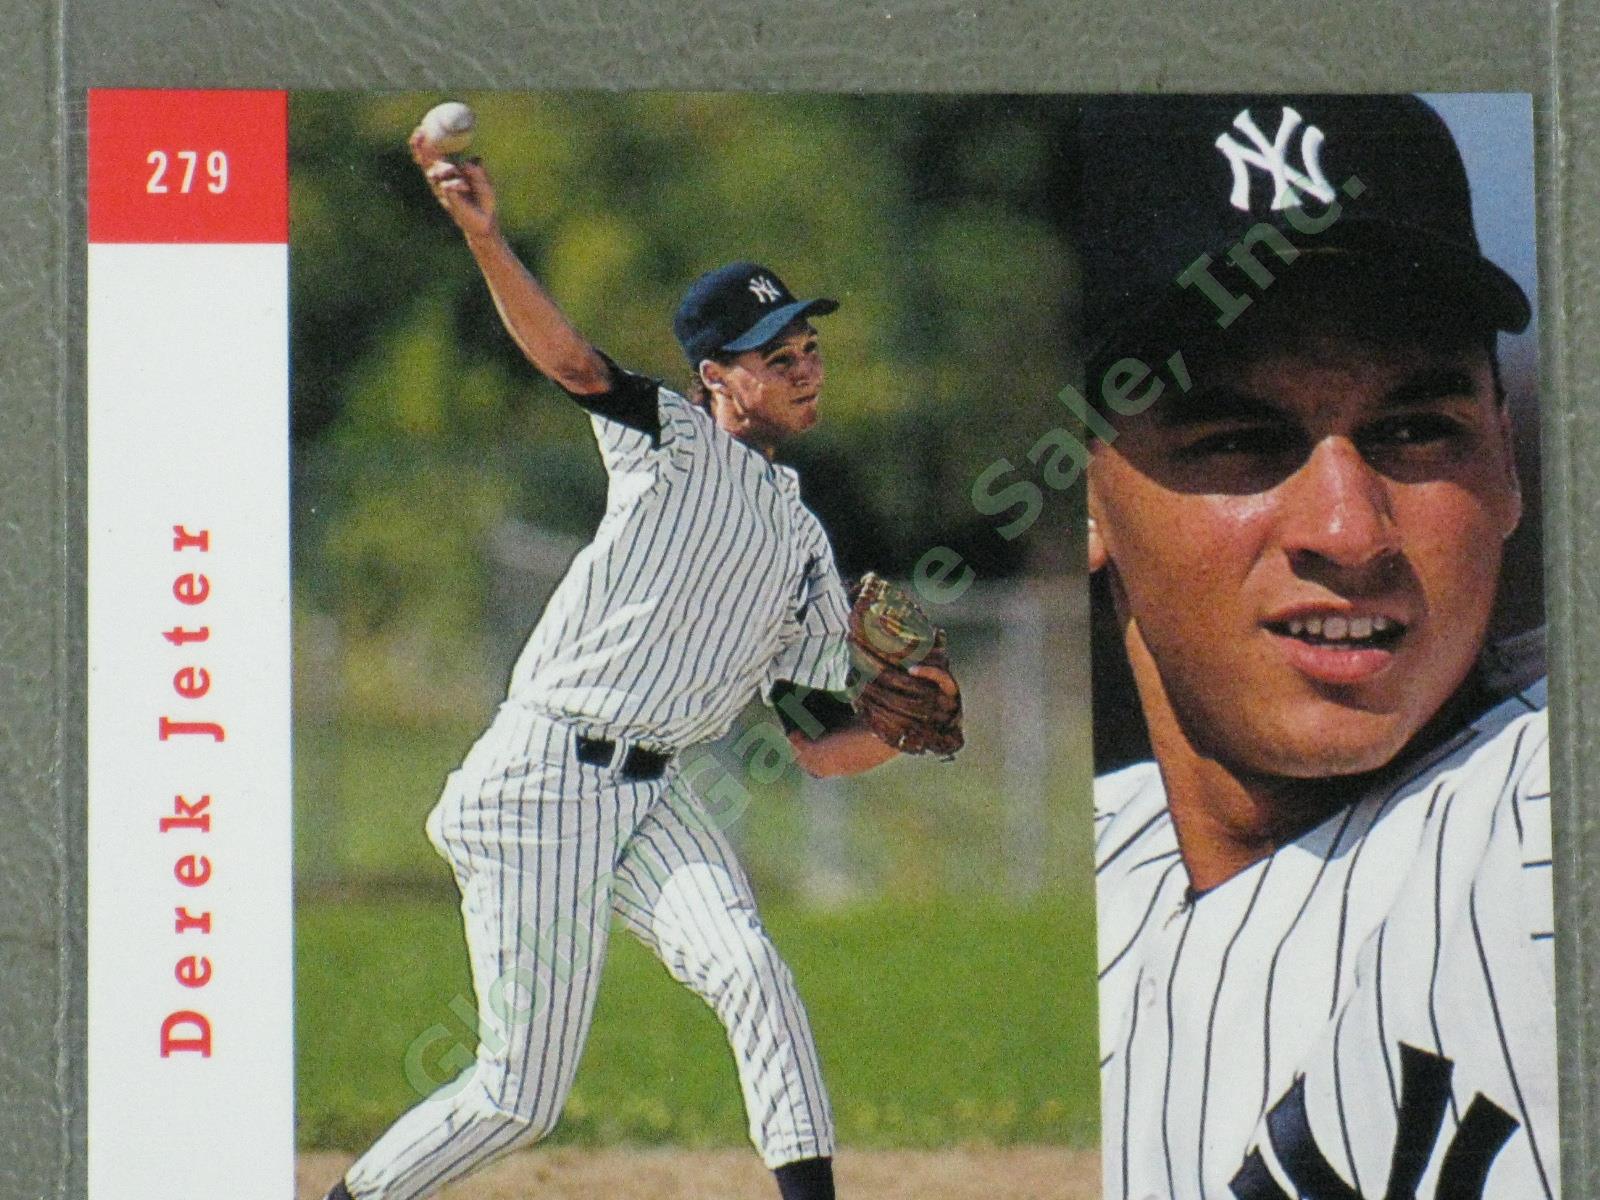 1993 Upper Deck SP Derek Jeter NY Yankees #279 Rookie Card Sealed Until 1/8/17! 3